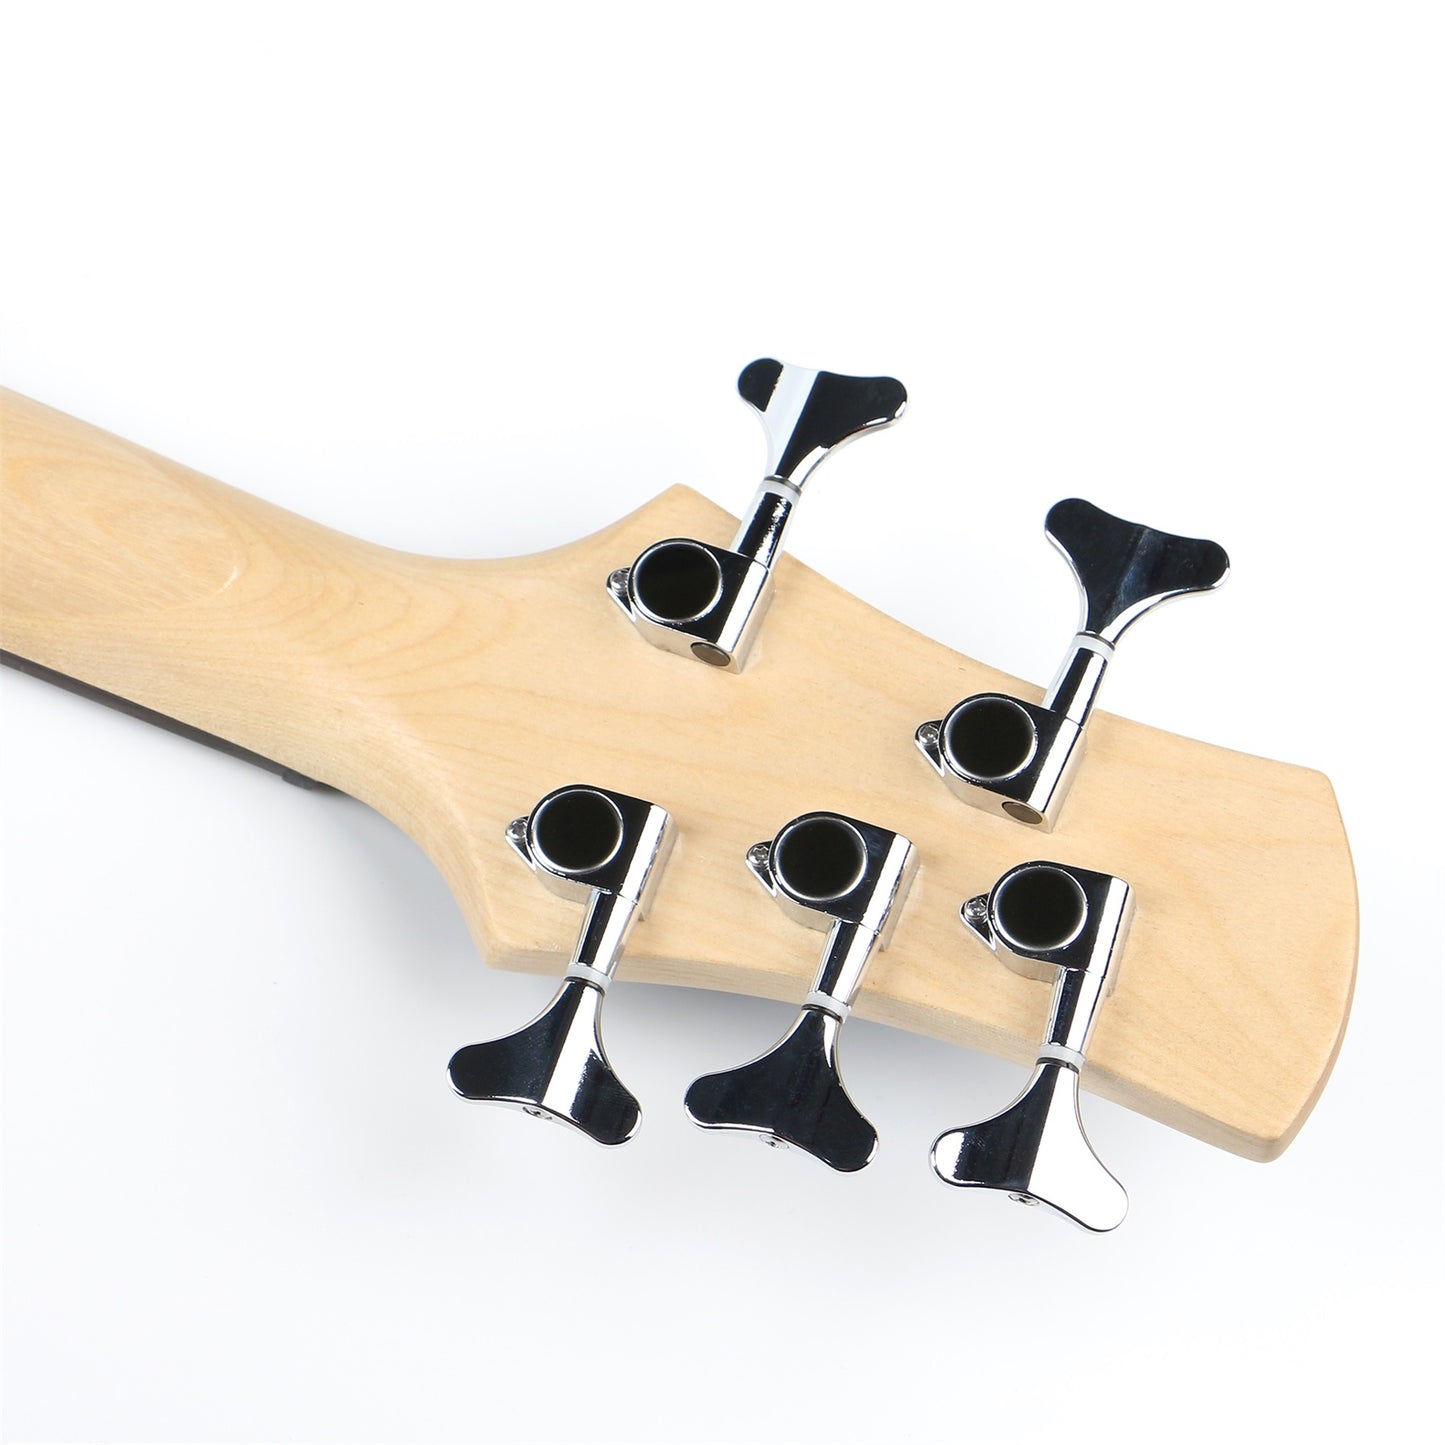 Deviser L-B3-5 Bass (5 Strings)